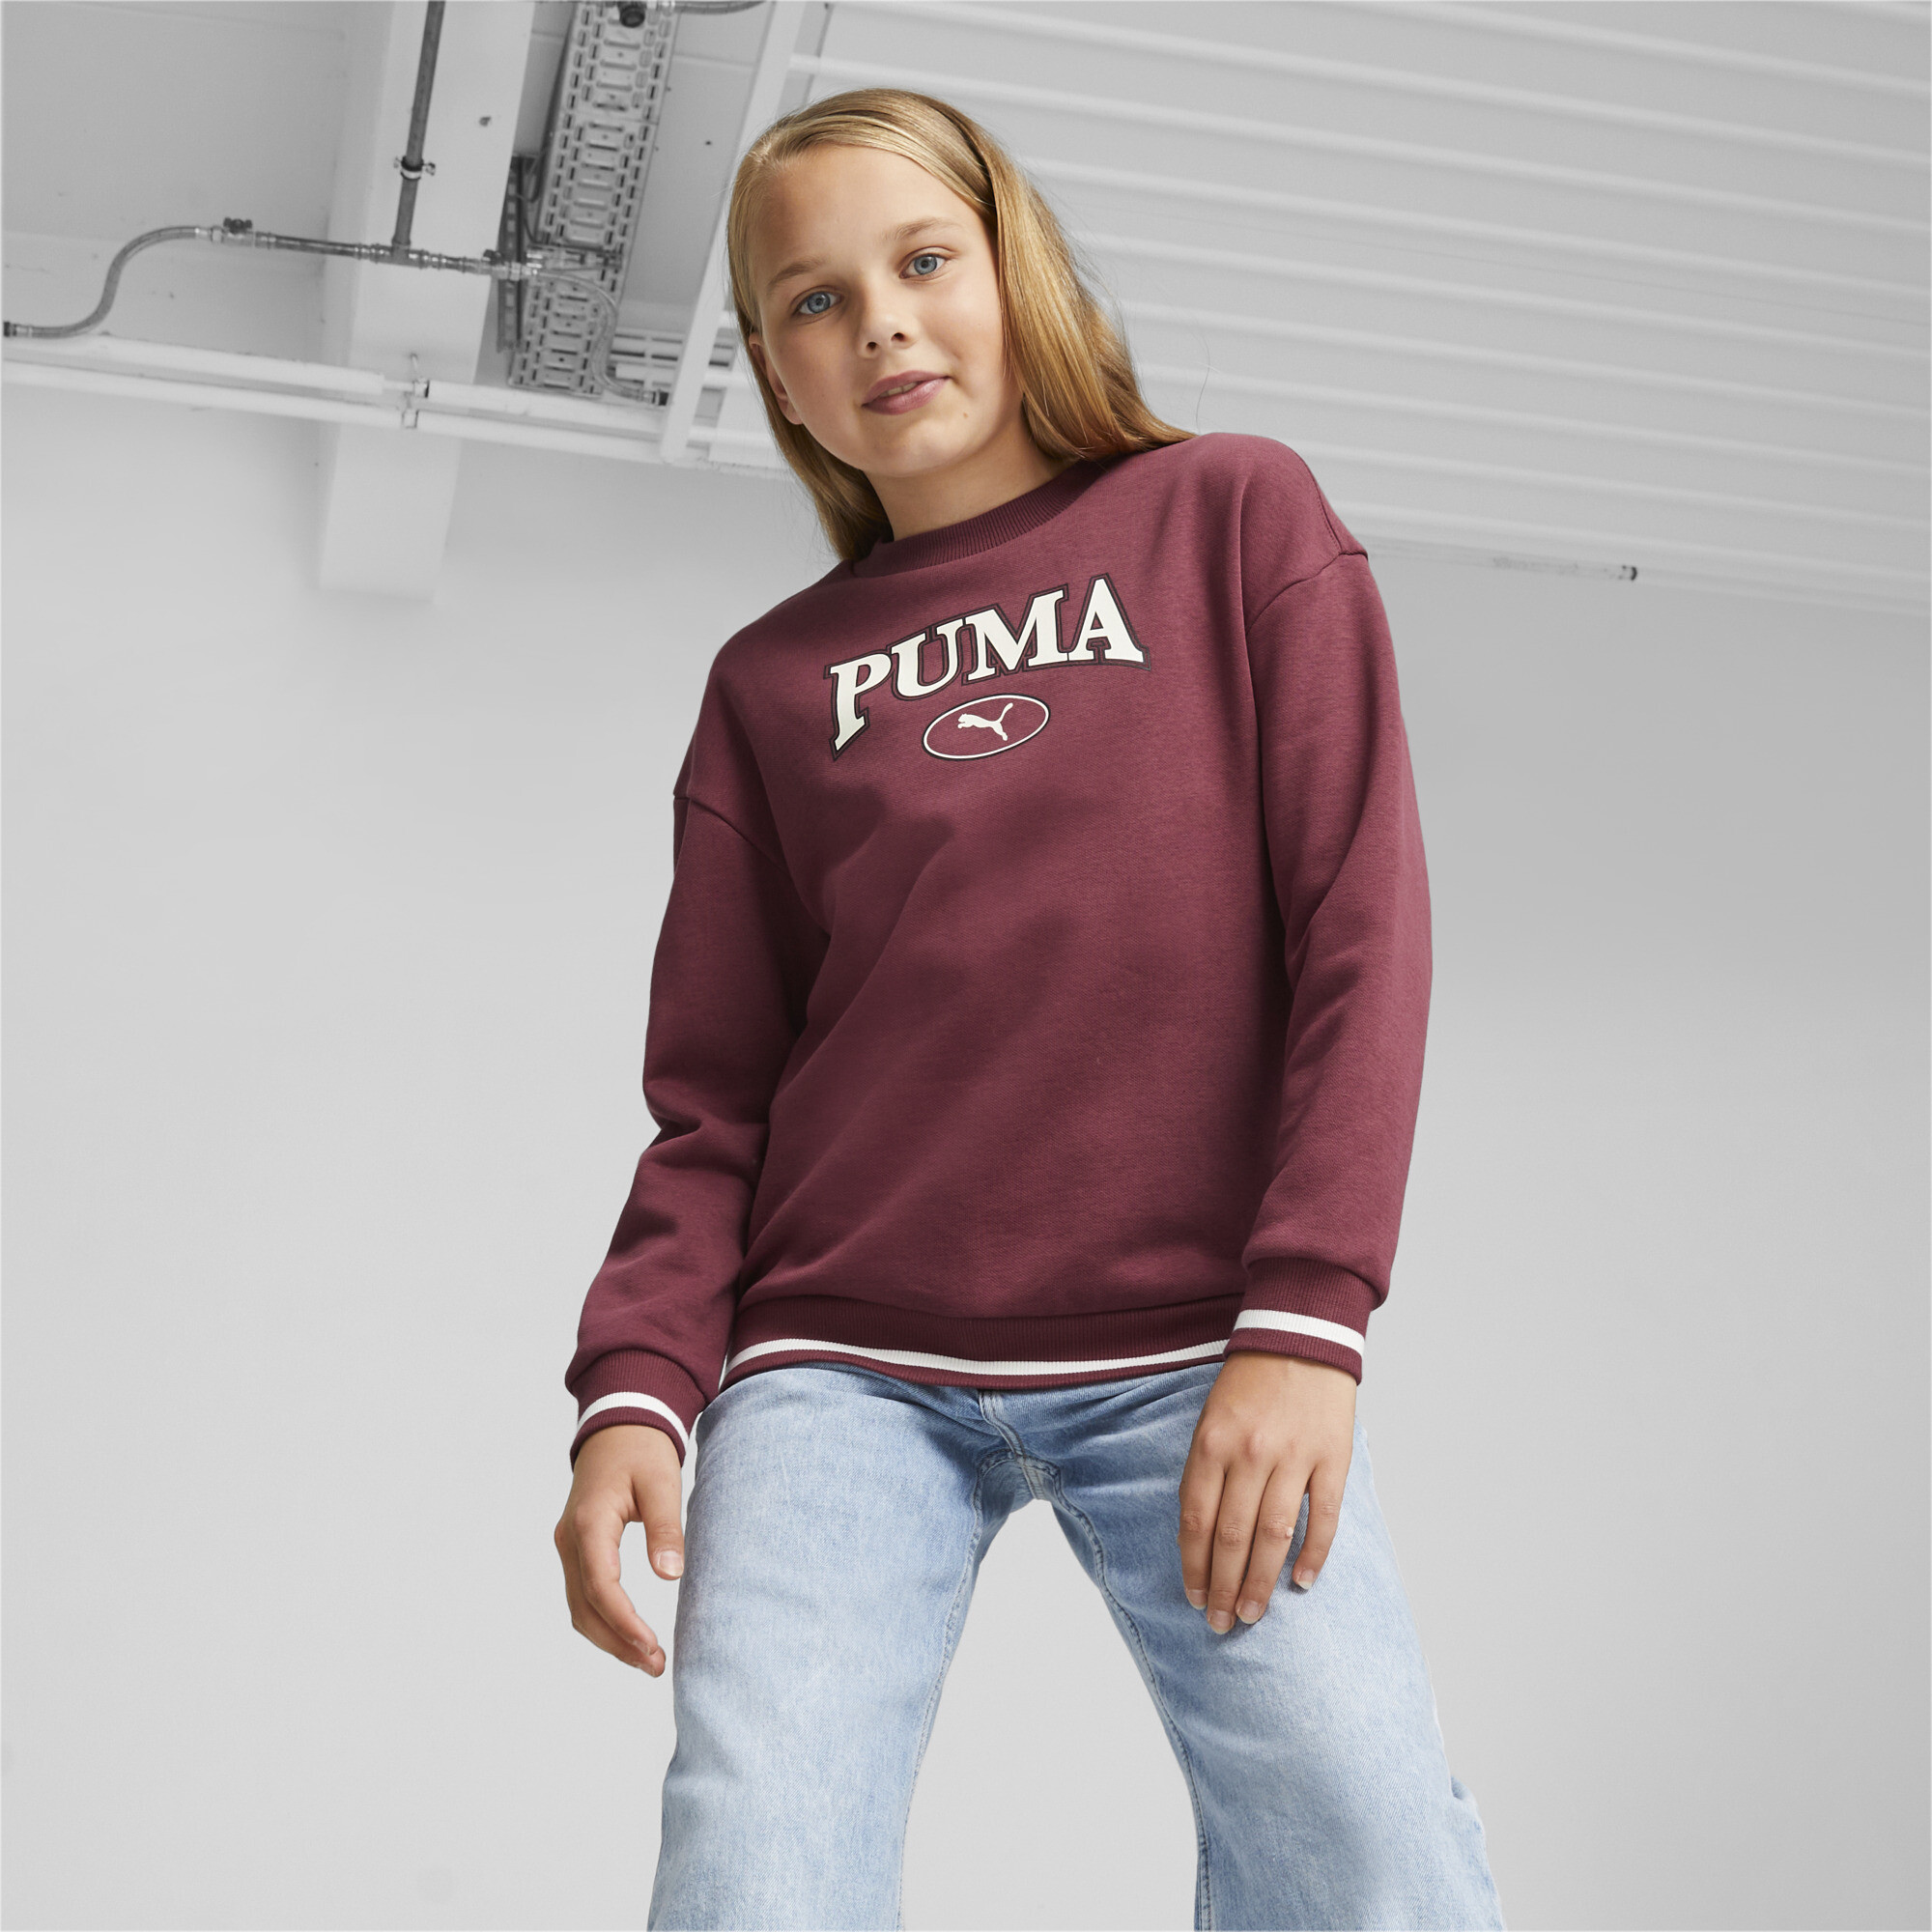 Women's Puma SQUAD Youth Sweatshirt, Red, Size 13-14Y, Clothing